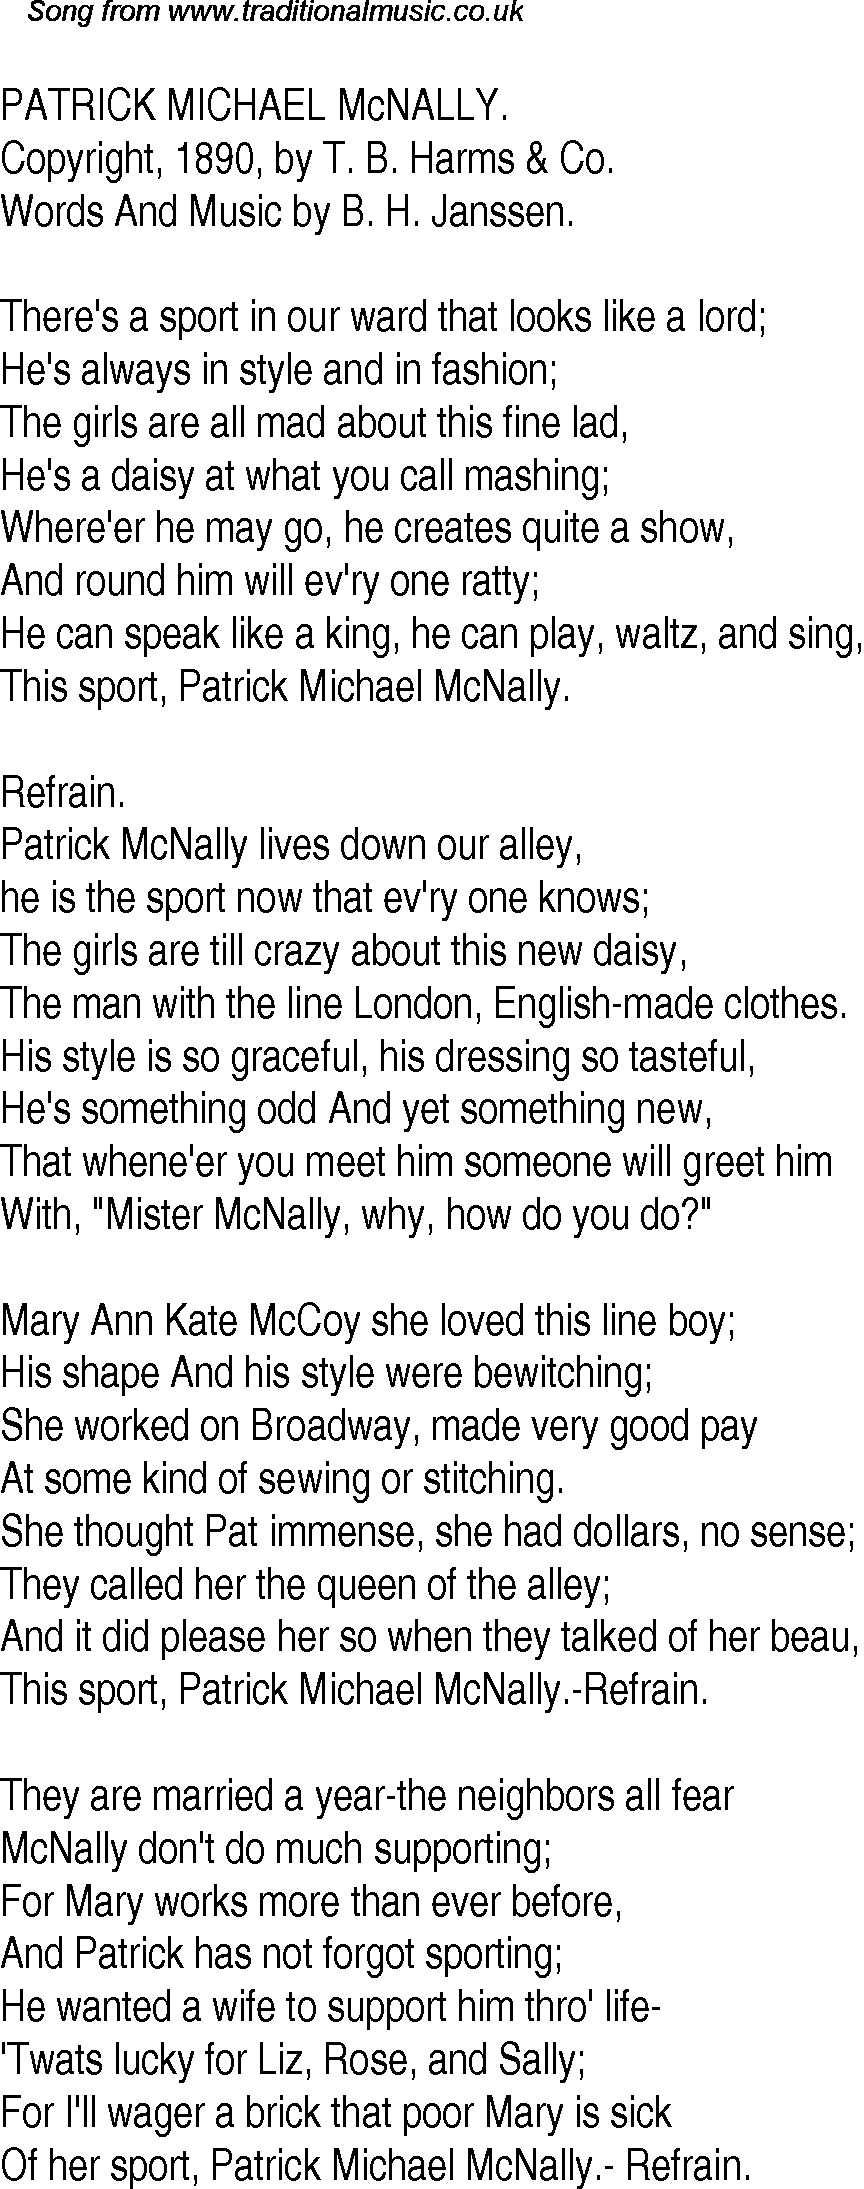 Old Time Song Lyrics For 27 Patrick Michael Mcnally